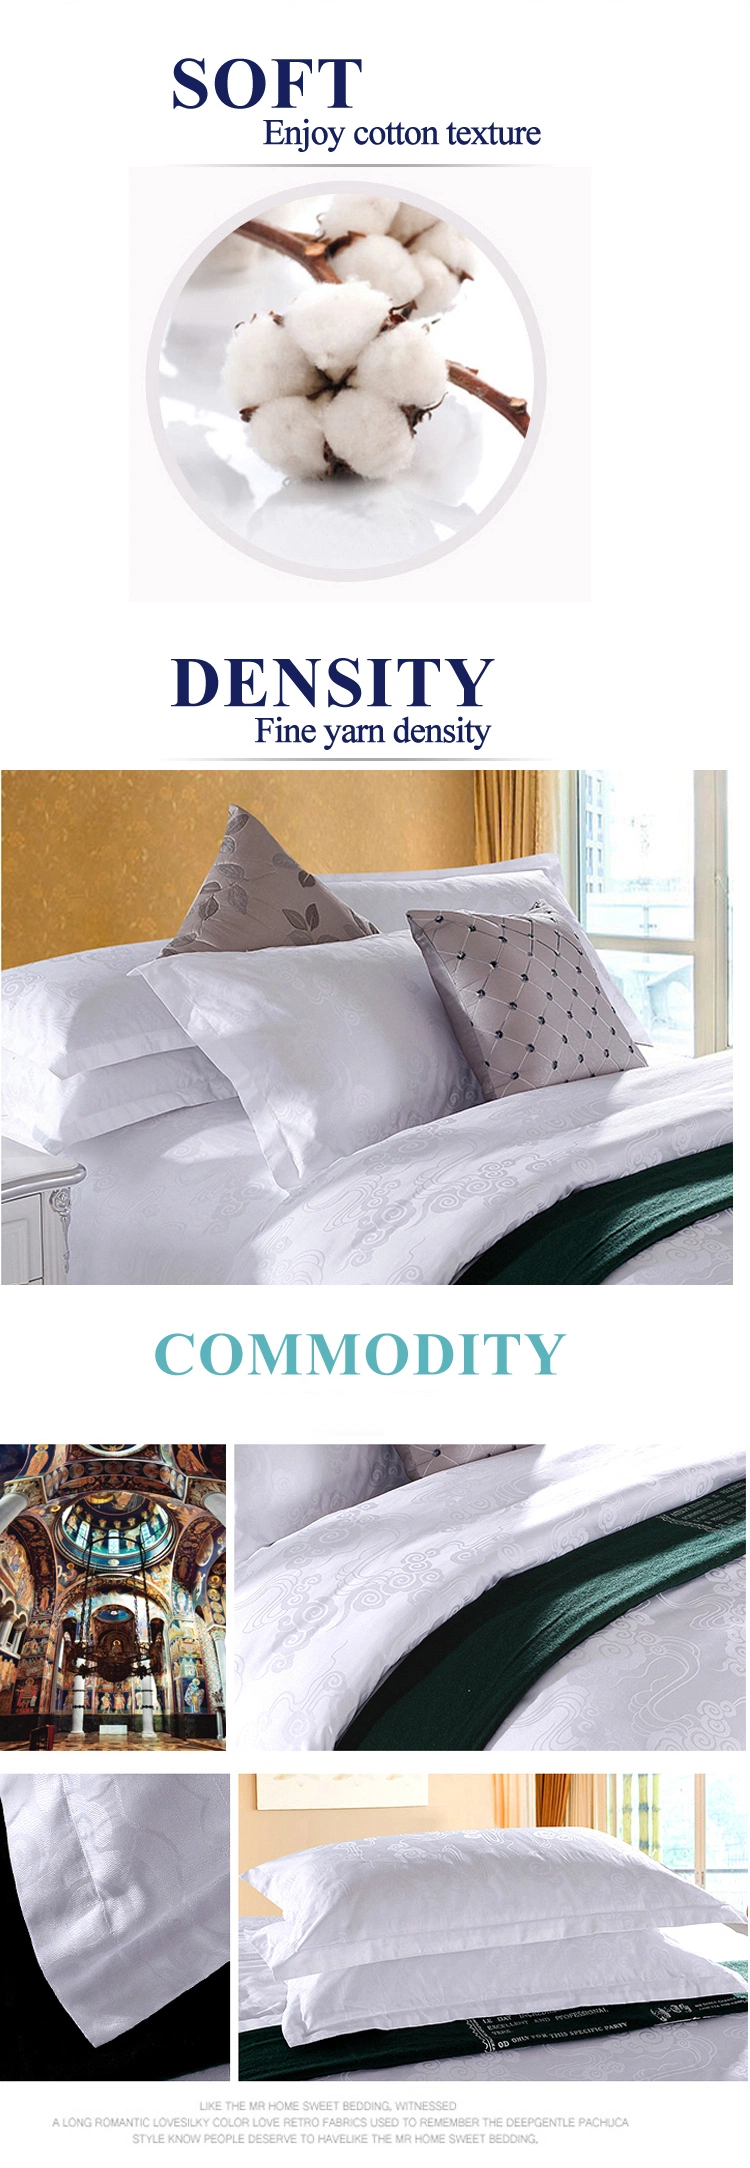 Yrf Hotel Collection Bedding Sets Fashion Design Jacquard Luxury Hotel Linen